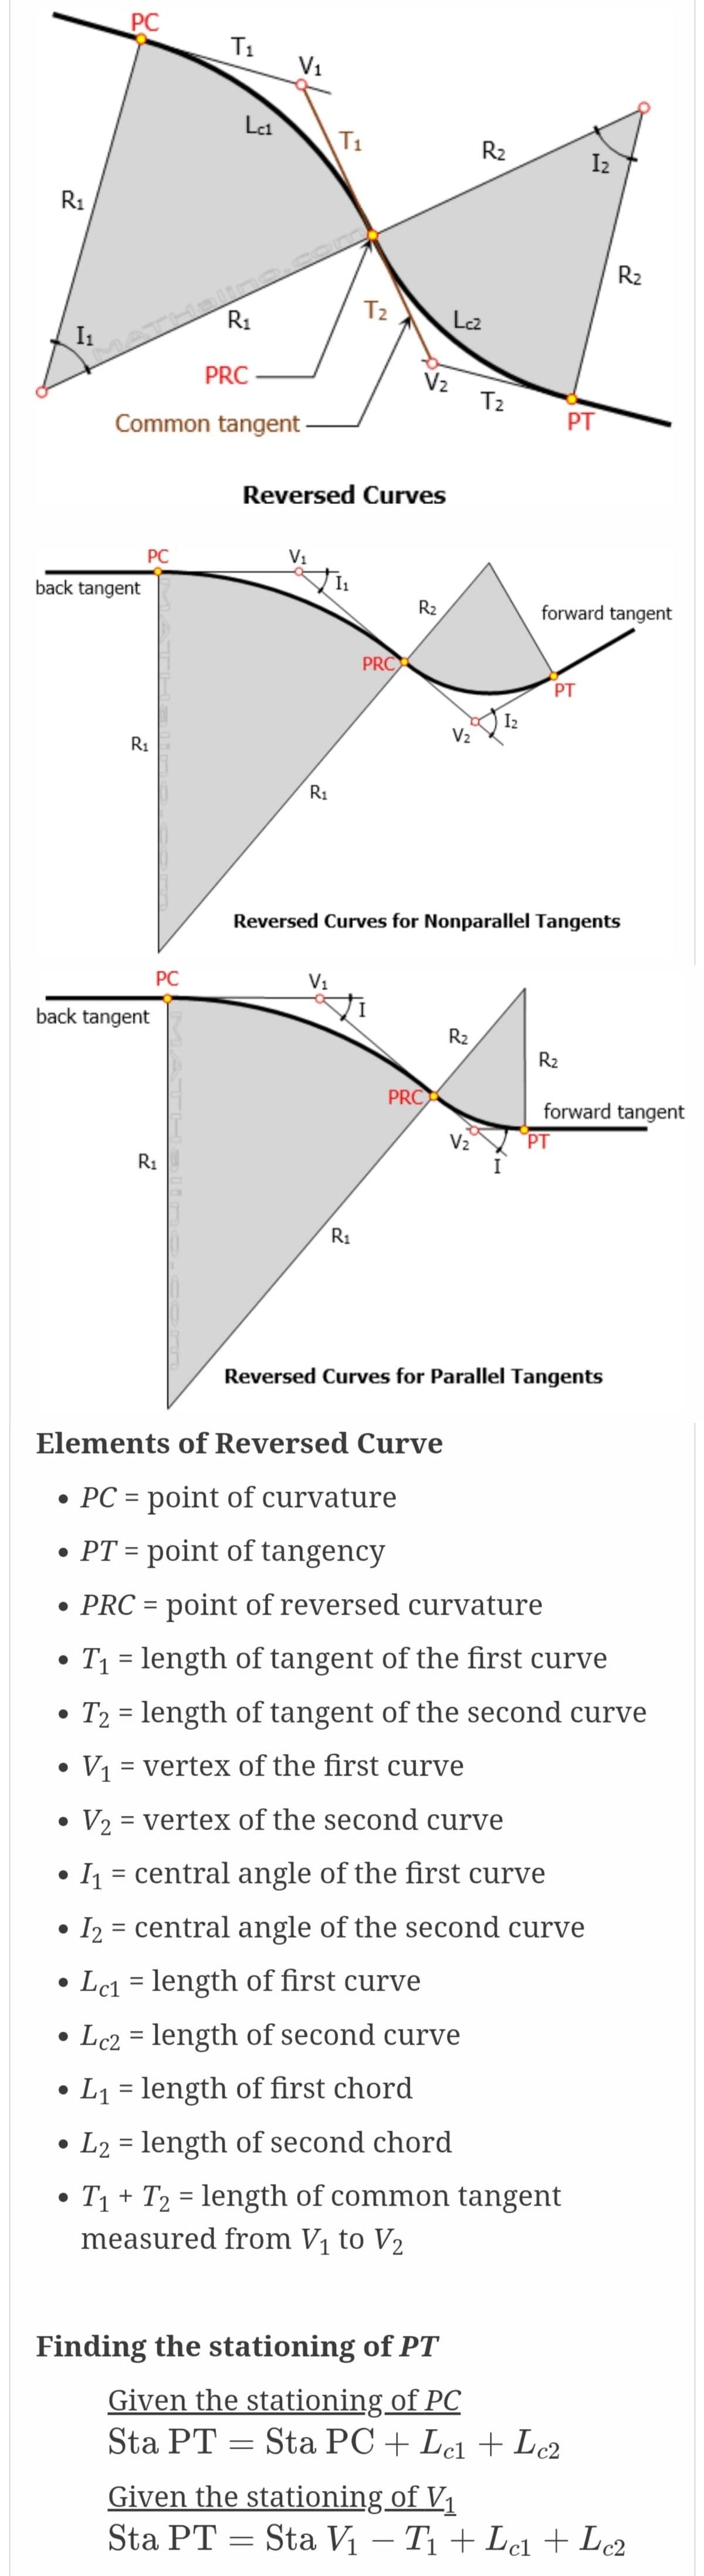 PC
T1
V1
Le1
T1
R2
Iz
R1
R2
T2
R1
Lcz
I1
PRC
V2
T2
Common tangent
PT
Reversed Curves
PC
V1
back tangent
R2
forward tangent
PRC
PT
I2
V2
R1
R1
Reversed Curves for Nonparallel Tangents
PC
V1
back tangent
R2
R2
PRC
forward tangent
V2
PT
R1
I
R1
Reversed Curves for Parallel Tangents
Elements of Reversed Curve
• PC = point of curvature
%3D
• PT = point of tangency
• PRC = point of reversed curvature
T1 = length of tangent of the first curve
T2 = length of tangent of the second curve
%3D
V1
= vertex of the first curve
V2 = vertex of the second curve
• I1 = central angle of the first curve
I2 = central angle of the second curve
Lc1 = length of first curve
Lc2 = length of second curve
L1 = length of first chord
%D
L2 = length of second chord
T1 + T2 = length of common tangent
measured from Vị to V2
%3D
Finding the stationing of PT
Given the stationing of PC
Sta PT = Sta PC + Le1 + L2
|
Given the stationing of V1
Sta PT = Sta Vị – Tị + Lcl + Le2
-
